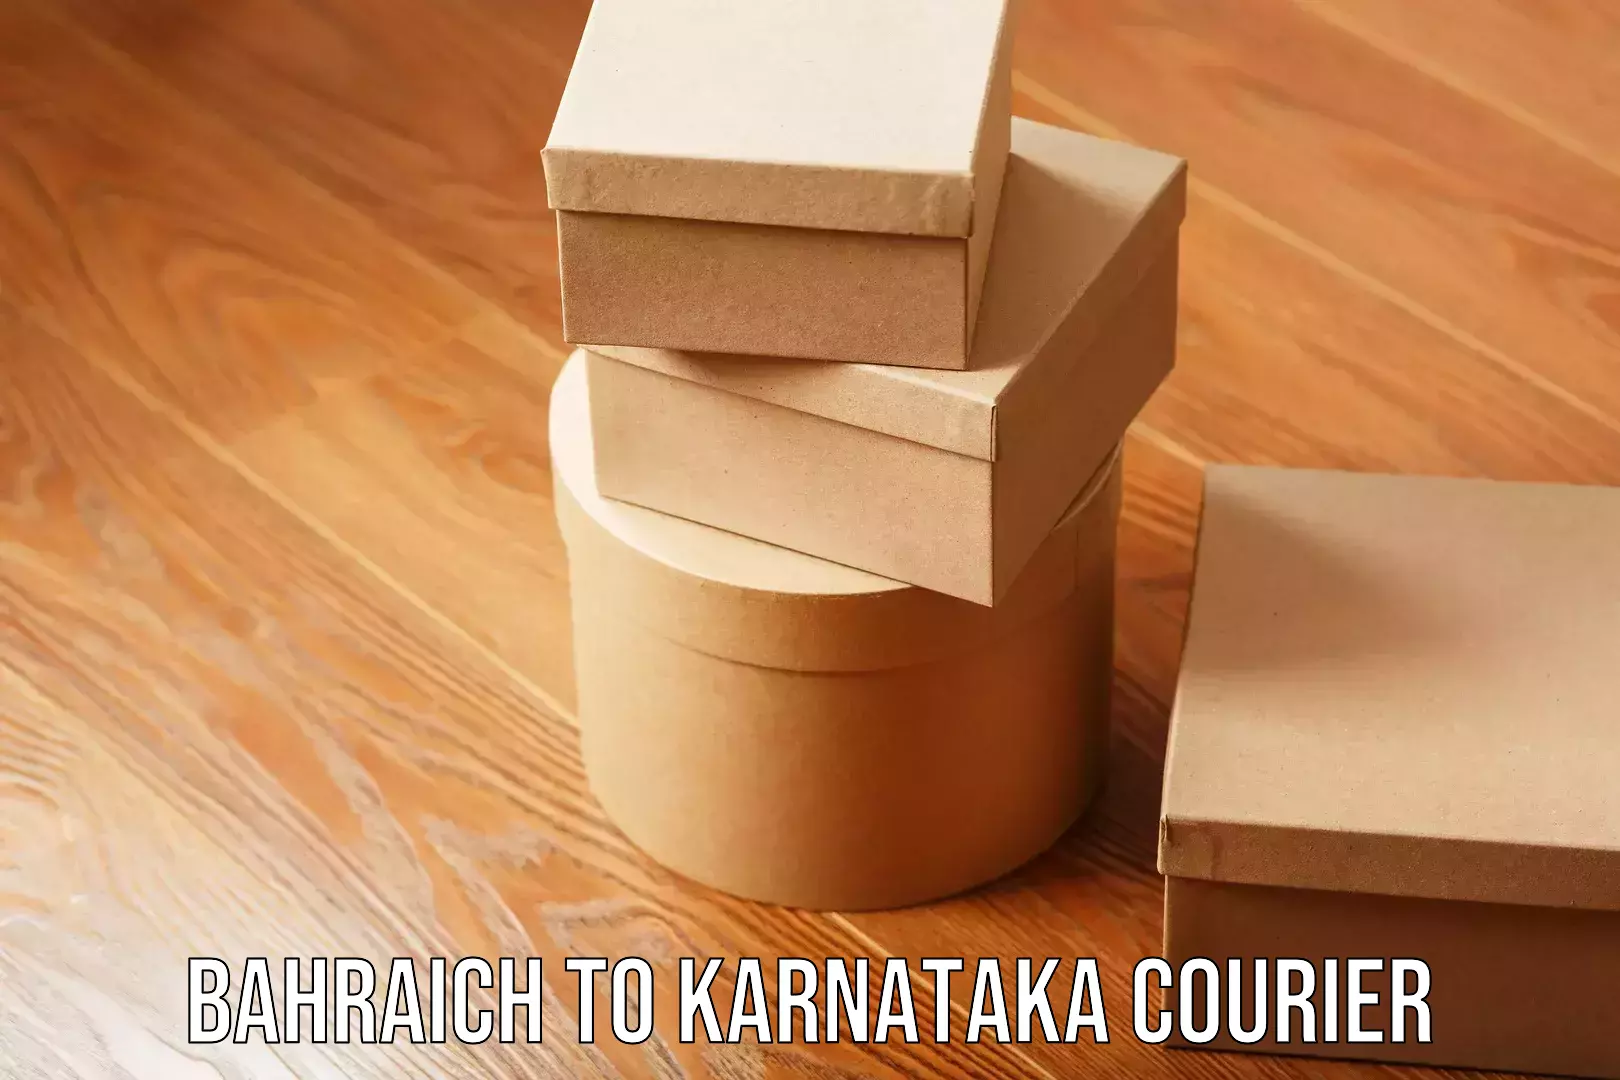 Budget-friendly shipping Bahraich to Karnataka